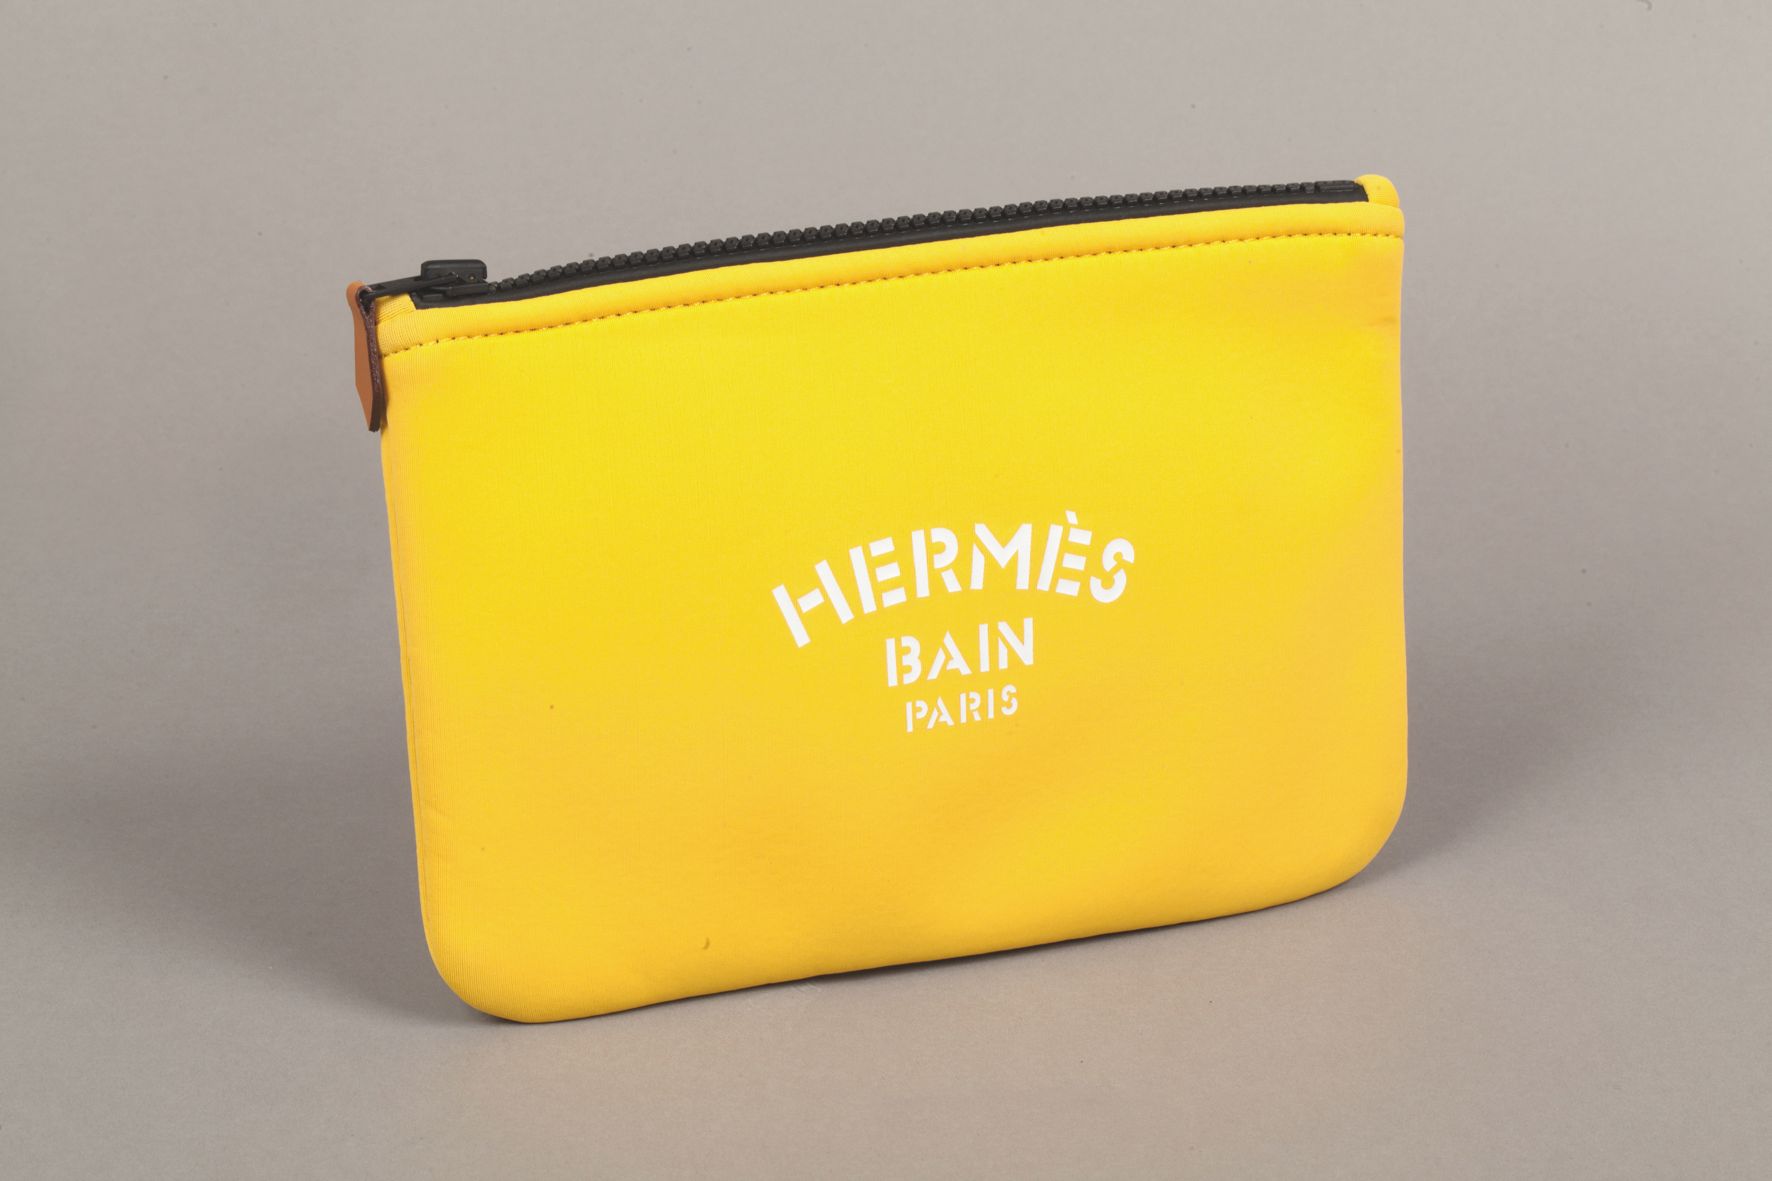 Null *HERMES Paris Bain - "Neobain "手袋PM 21cm，黄色氯丁橡胶材质，拉链封口。状况极佳。